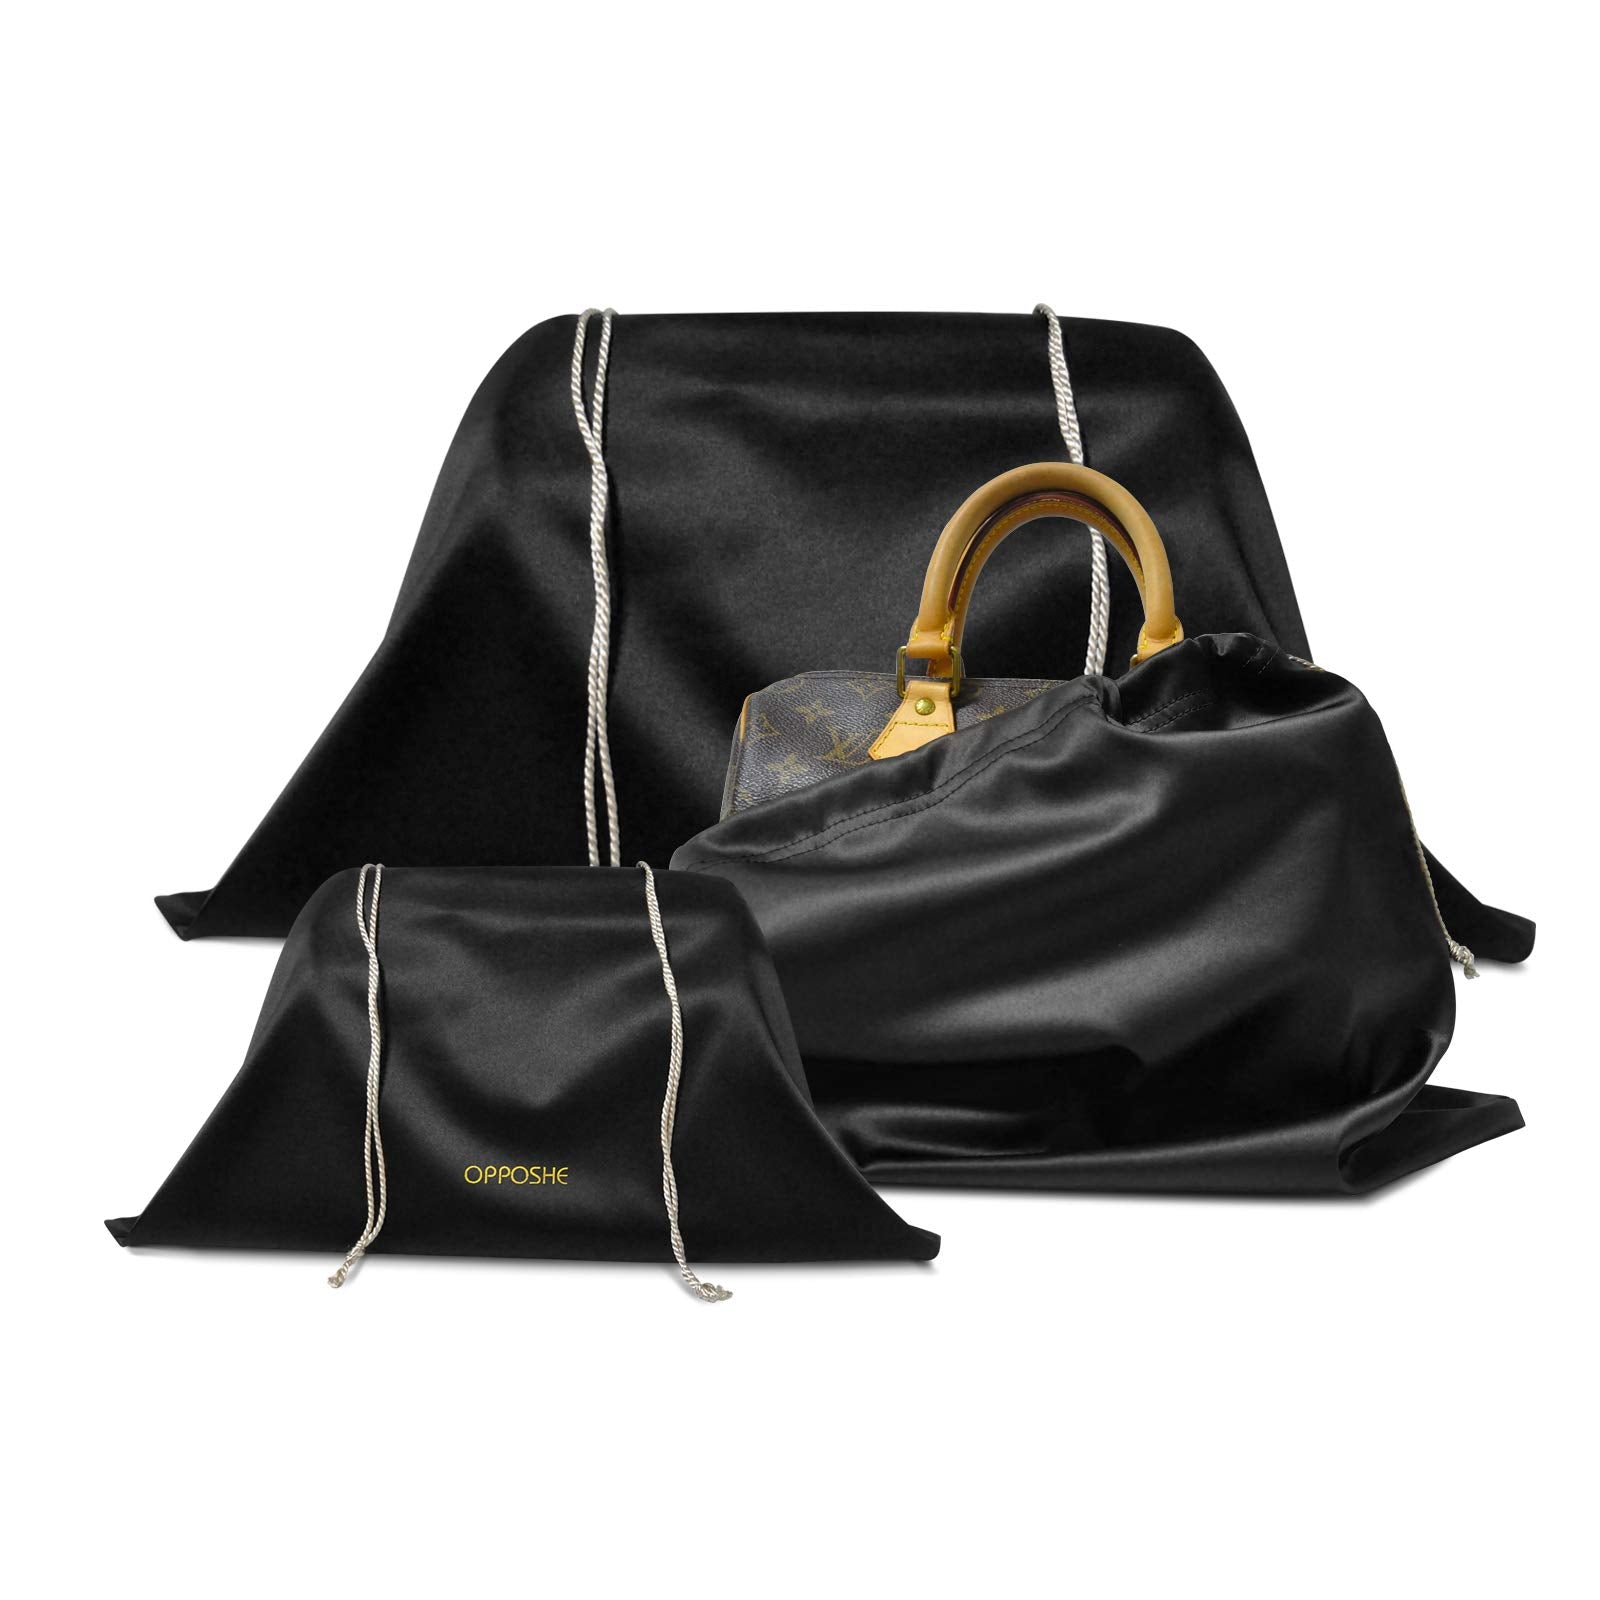 Satin Pillow Luxury Bag Shaper For Louis Vuitton's Speedy 25, Speedy 30,  Speedy 35 and Speedy 40 in Chocolate Brown